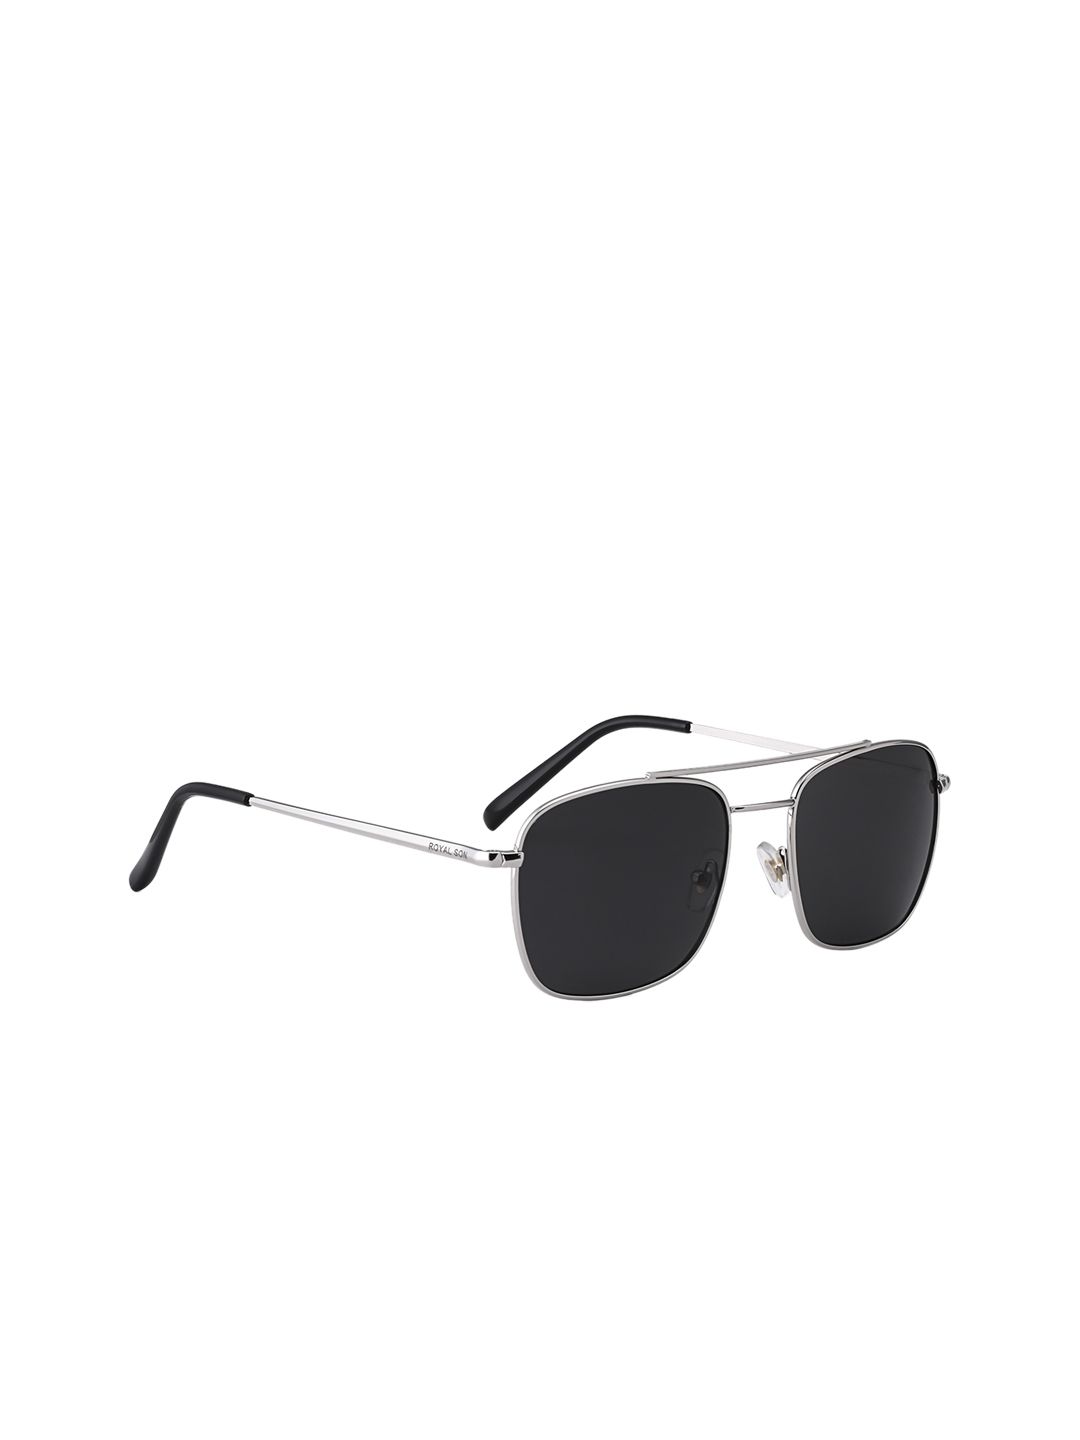 ROYAL SON Unisex UV Protected Lens Square Sunglasses RS0038AV Price in India